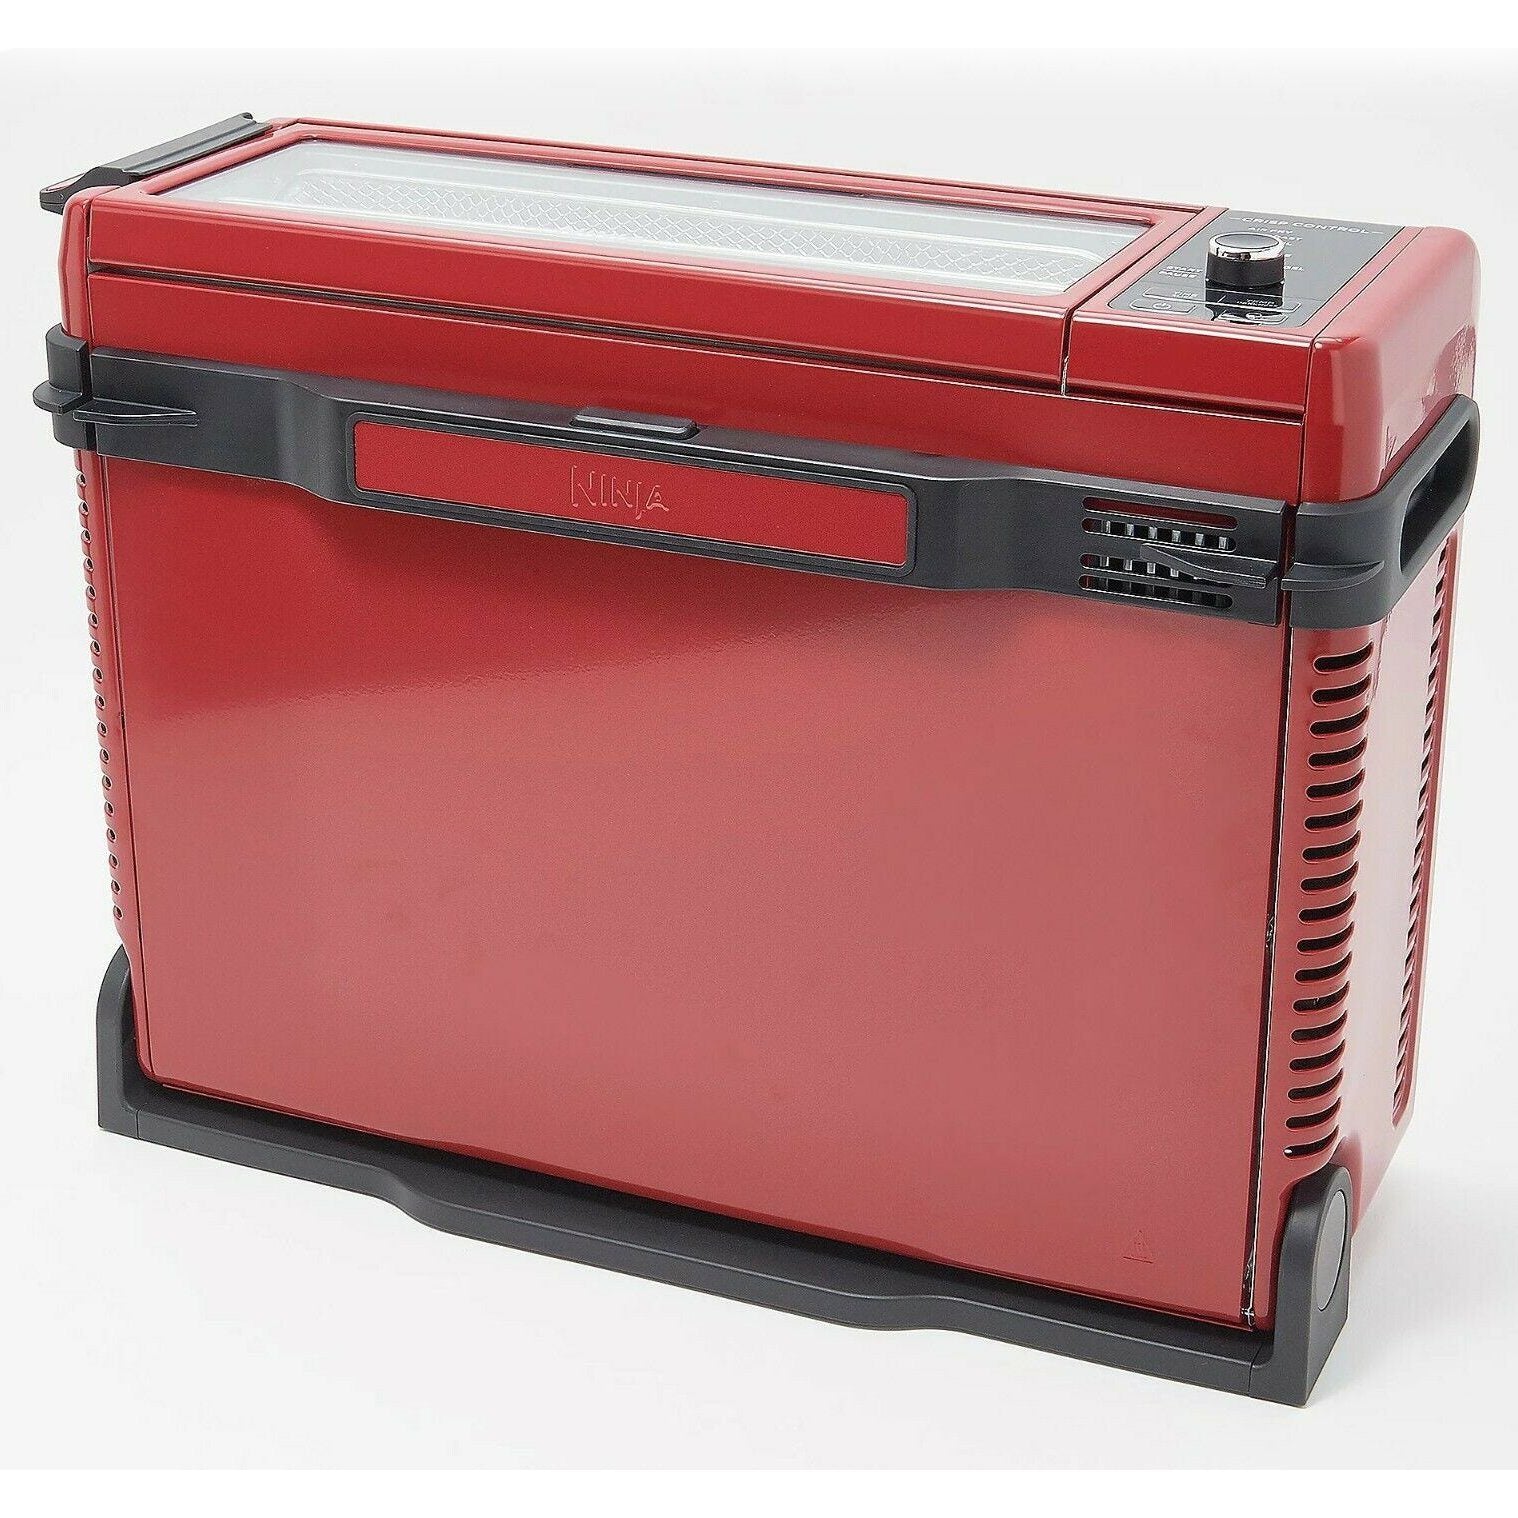 Ninja SP101 Foodi 8-in-1 Digital Air Fry, Large Toaster Oven – Techmania54